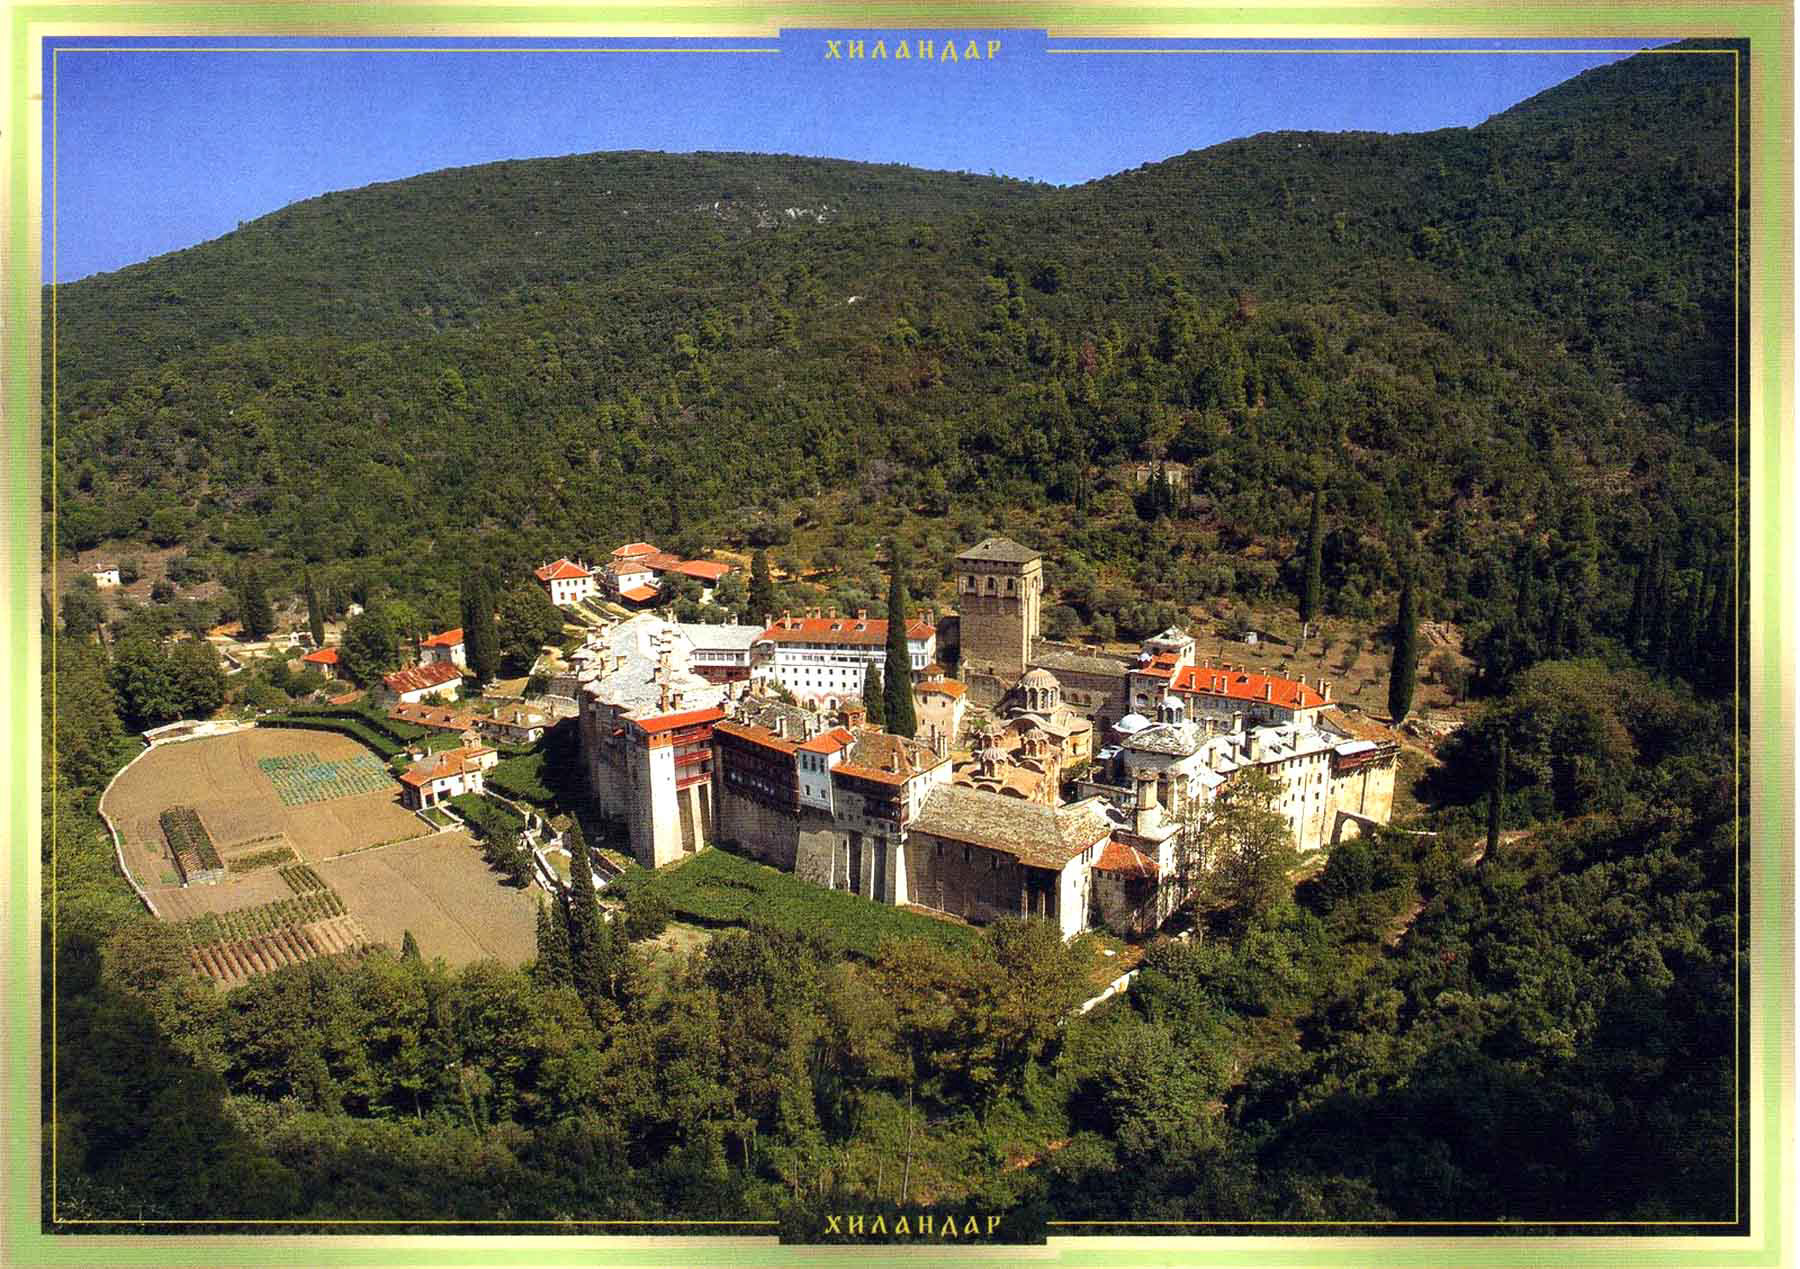 An aerial view of Hilandar Monastery